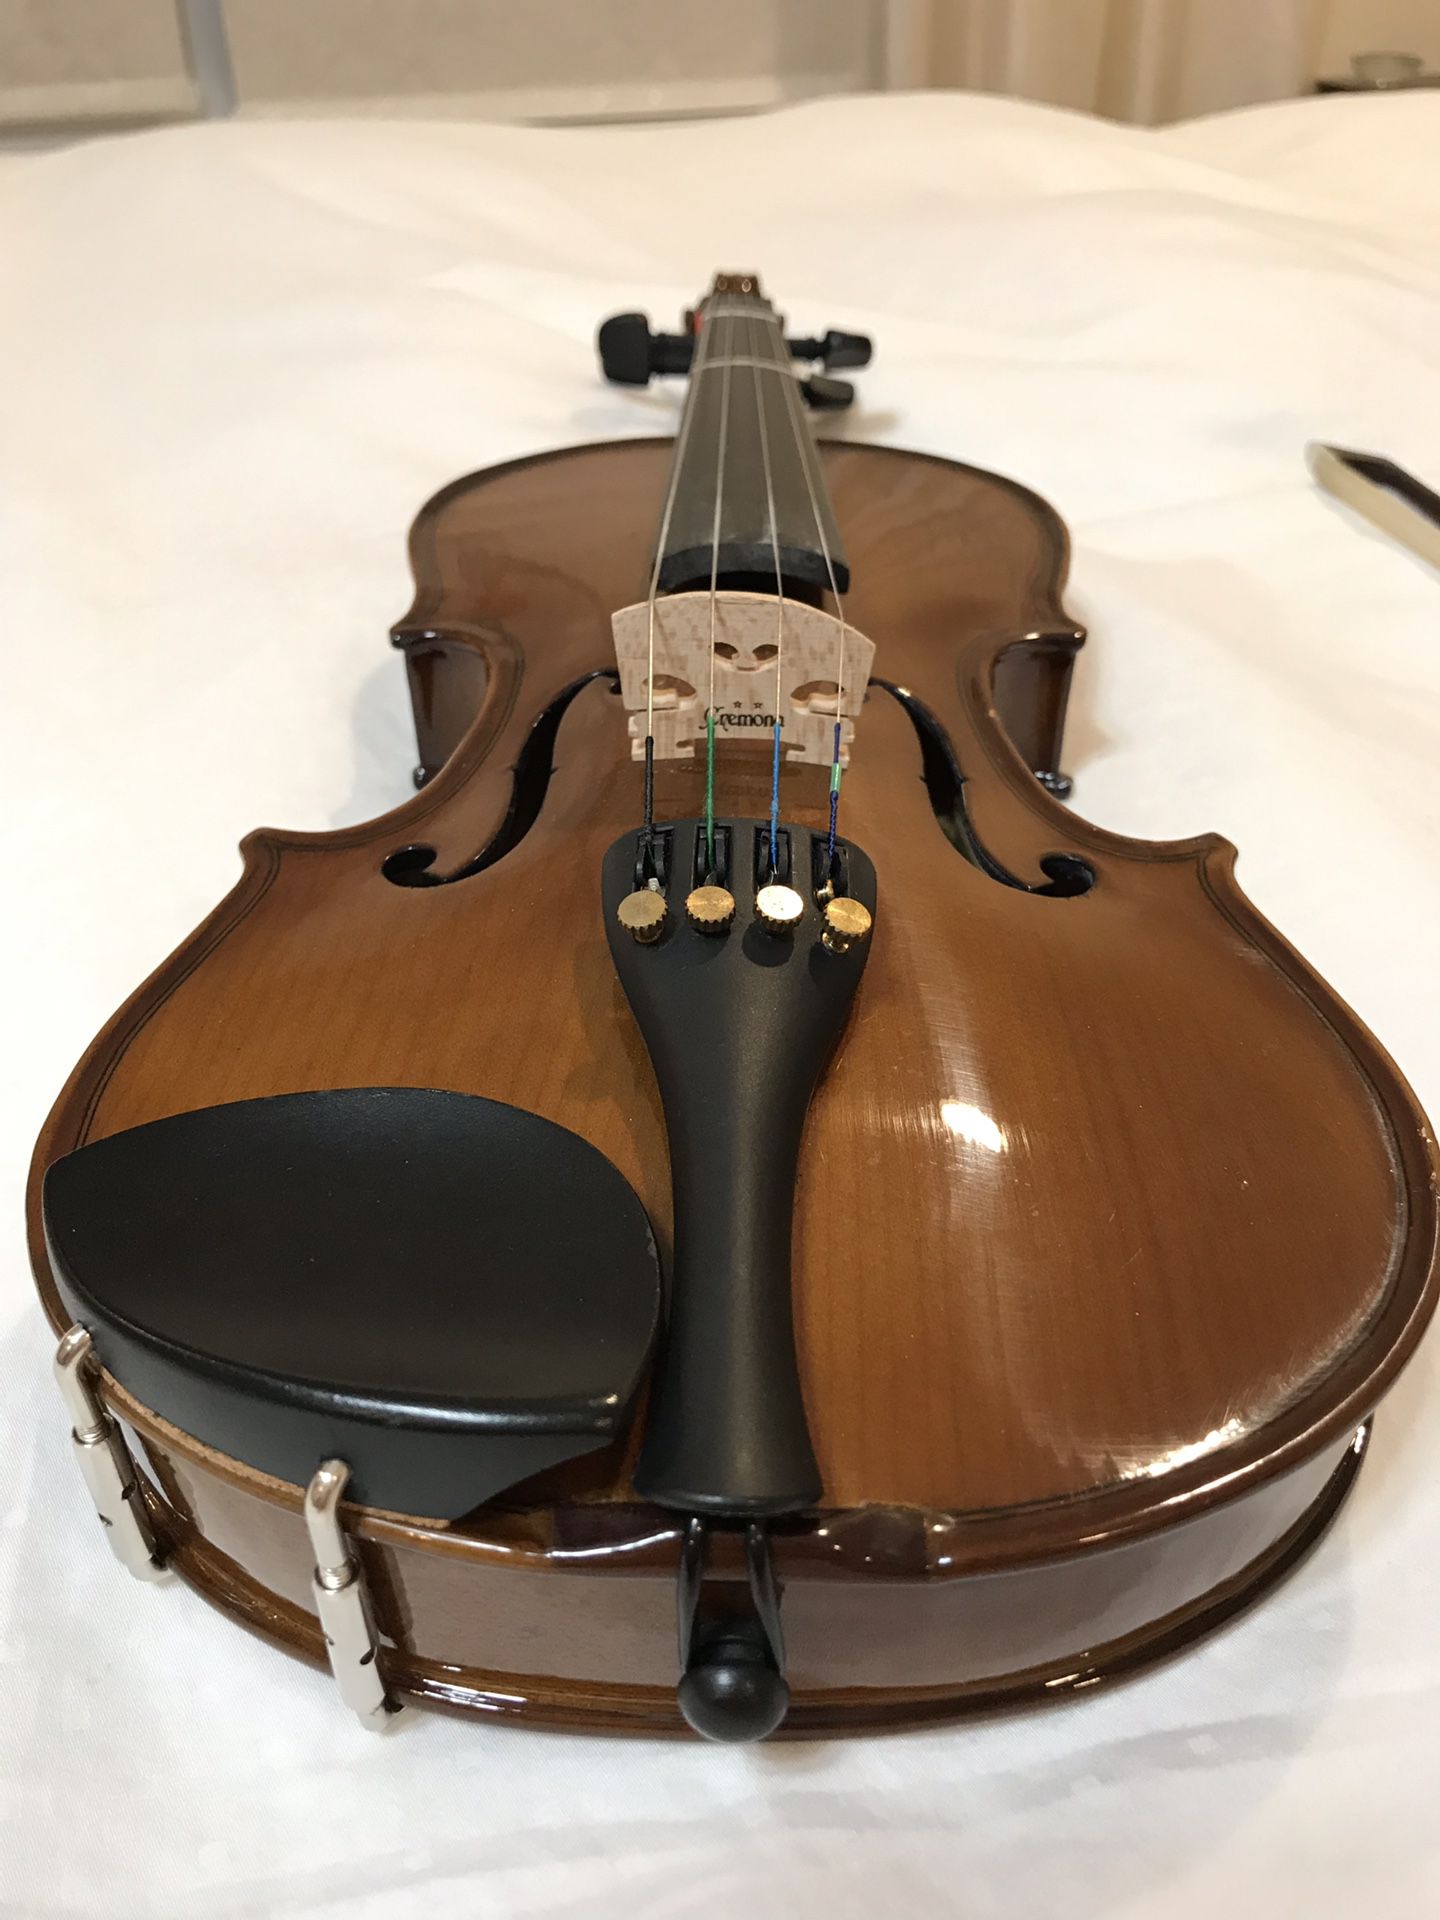 Cremona 1/4 violin model SV-75